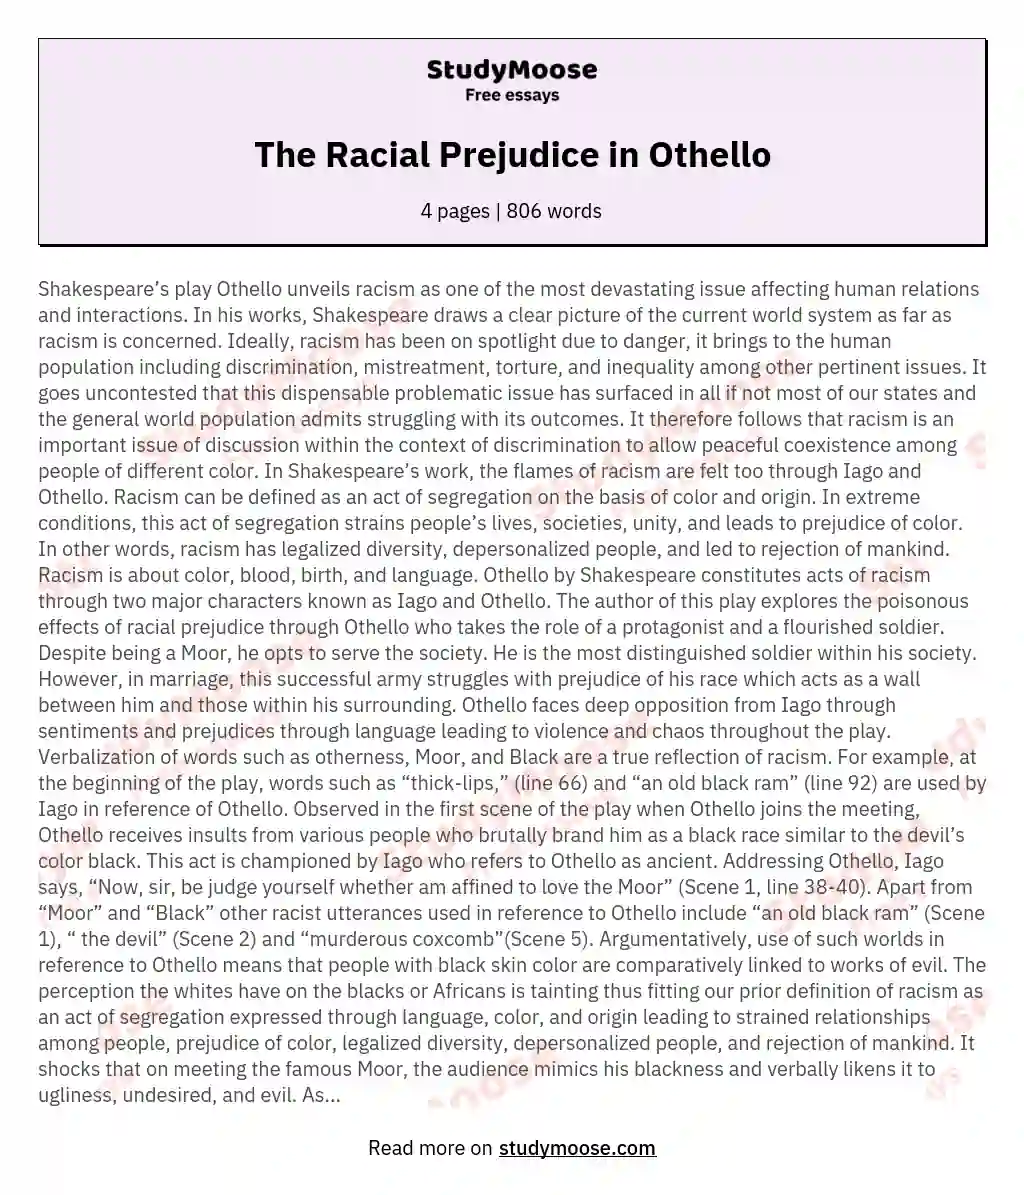 The Racial Prejudice in Othello essay